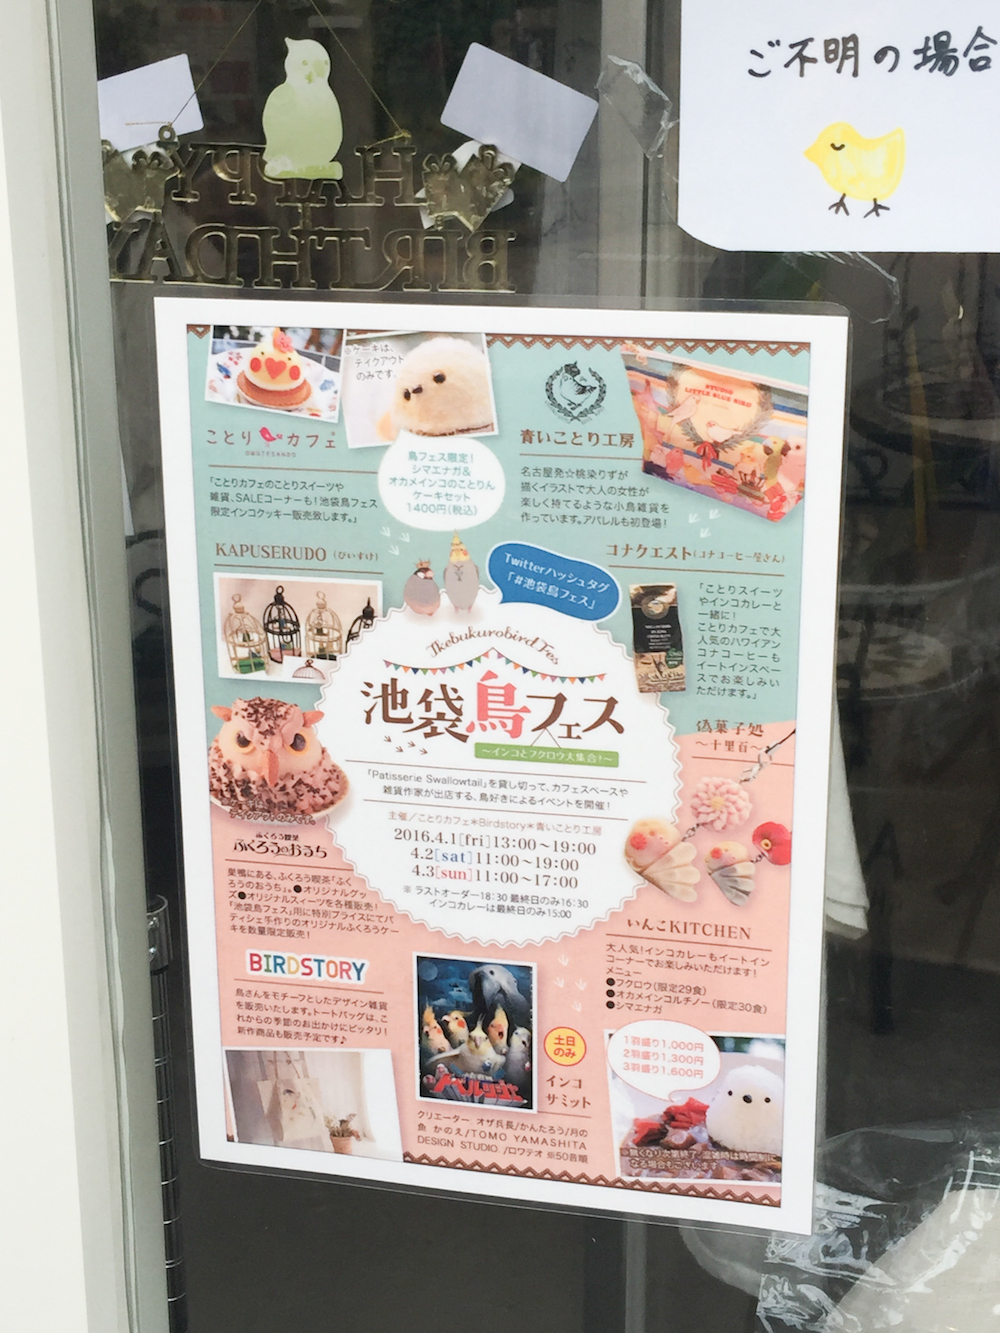 vogel-restaurant-menu-tokyo